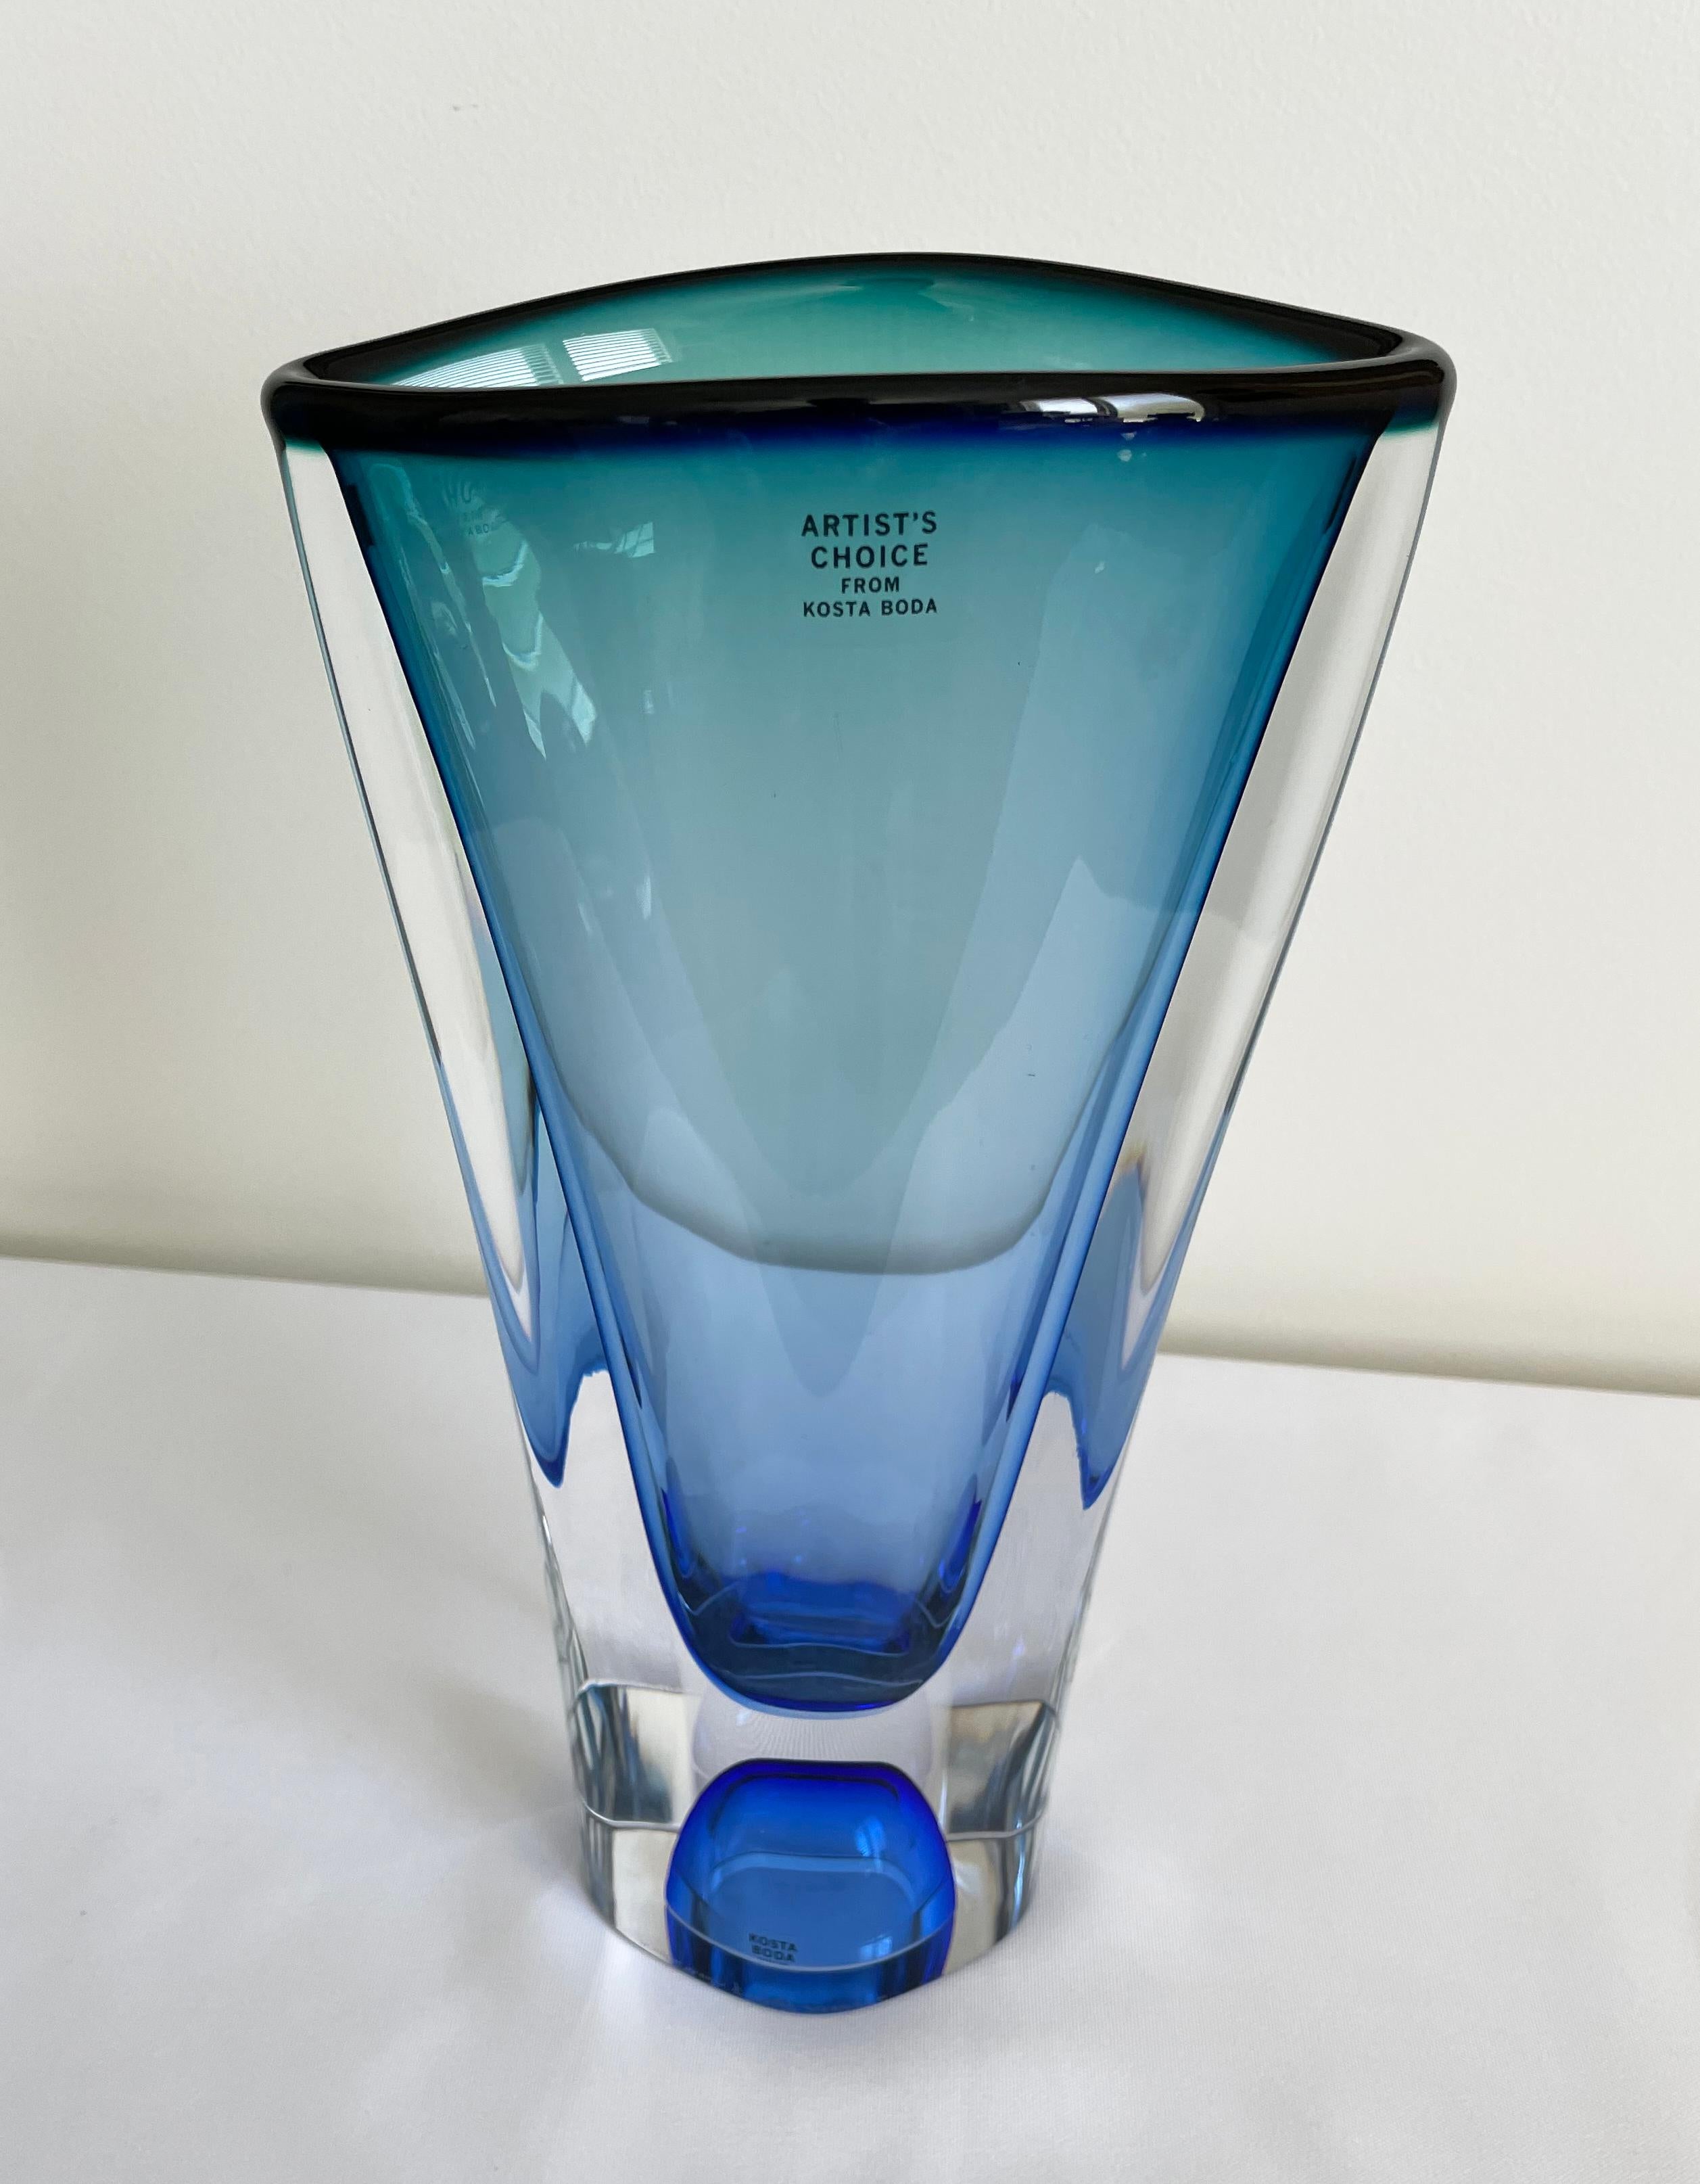 Kosta Boda tall blue Vision series vase designed by the legendary glass artist Göran Wärff.

Vision is handblown at Kosta Glassworks in Sweden and is part of the Kosta Boda Artist Collection.